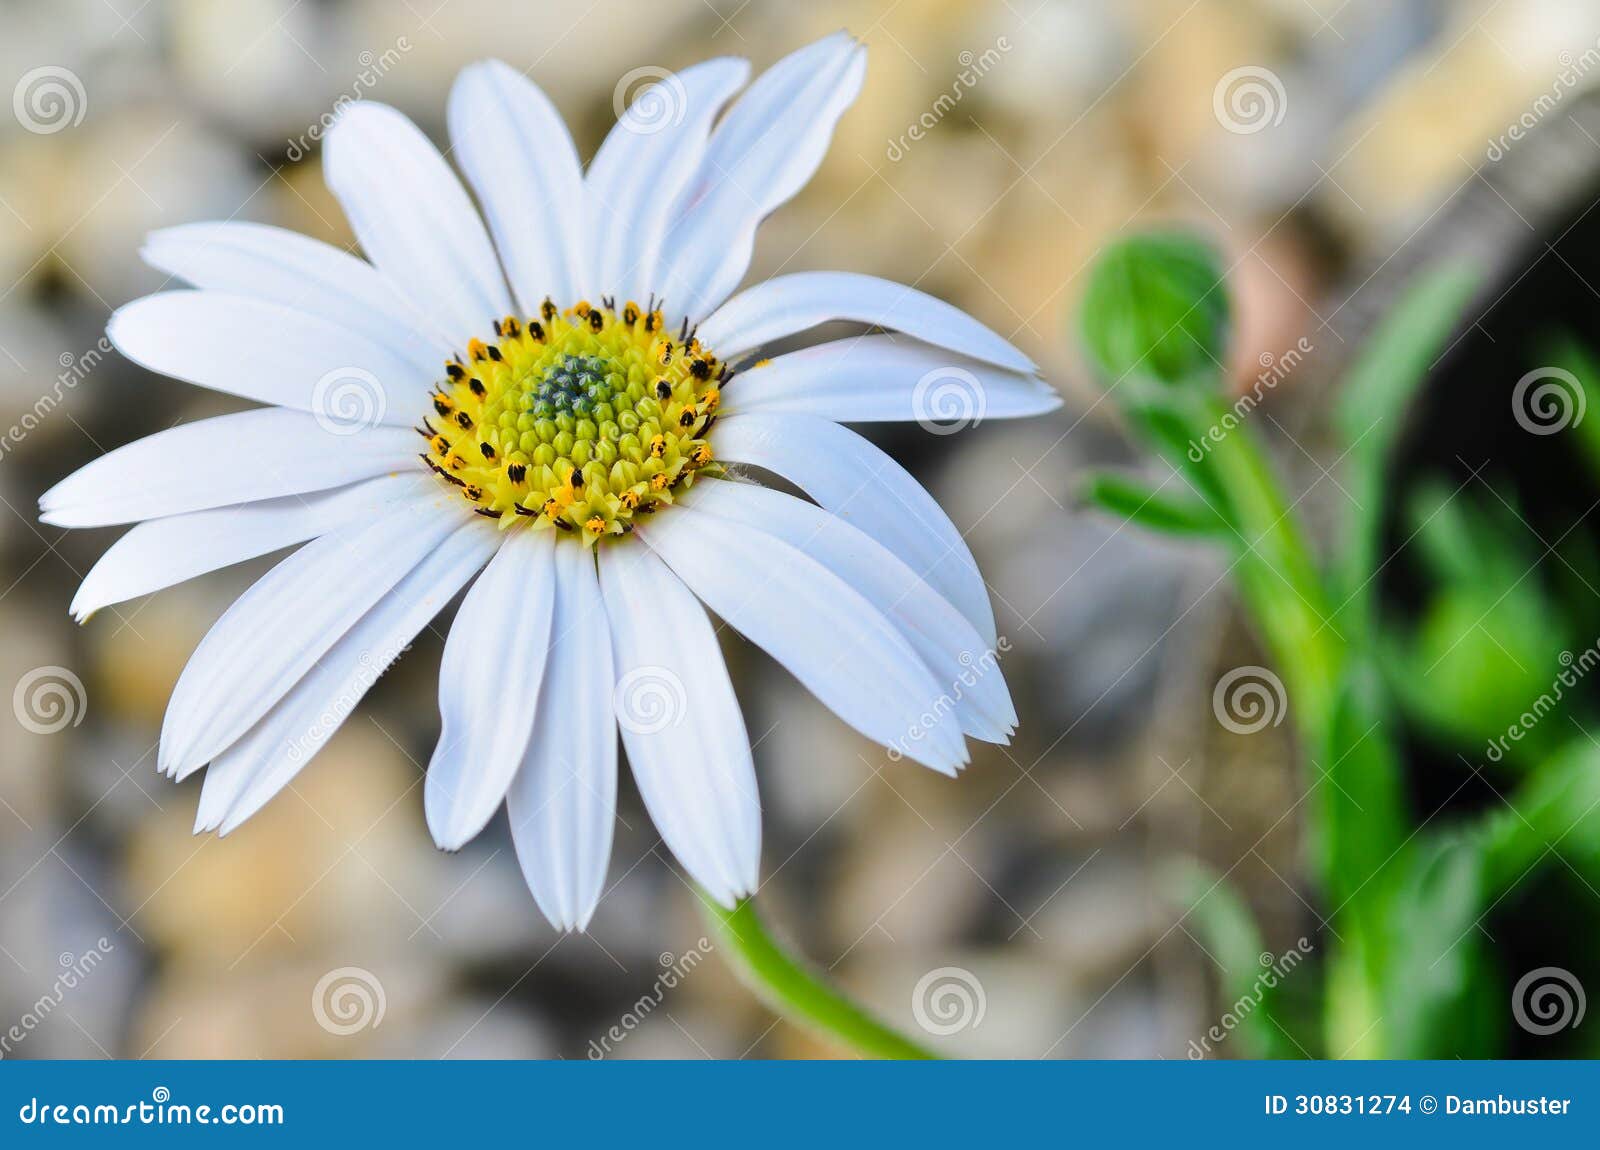 osteospermum daisy flower